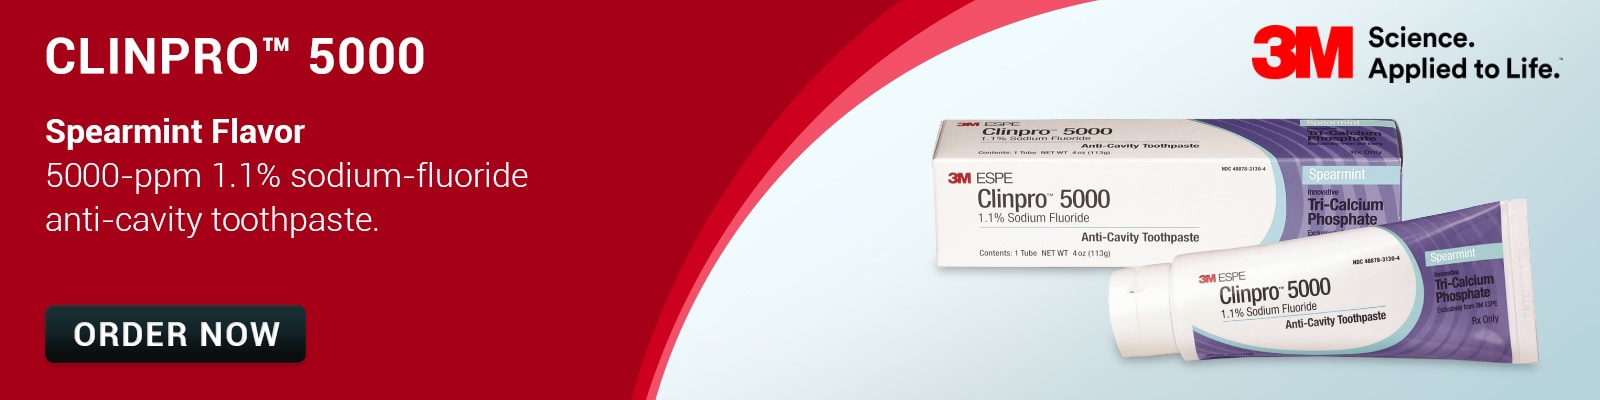 Shop 3M™ Clinpro™ 5000 anti-cavity toothpaste in spearmint flavor